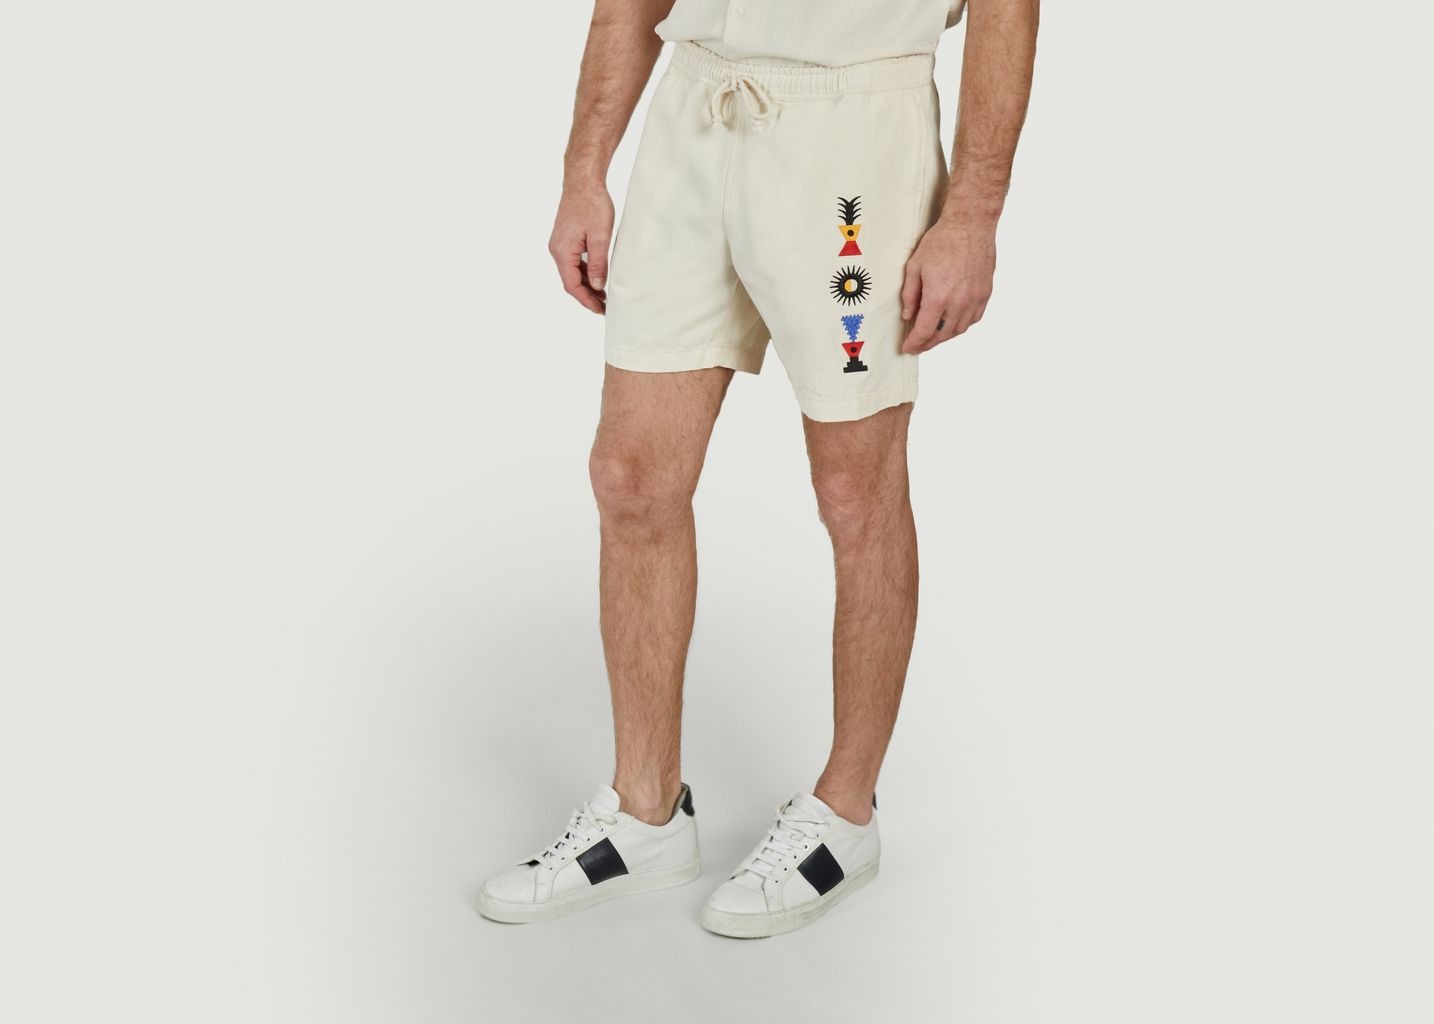 Bodhi Atoum x Marco Oggian embroidered shorts - Olow